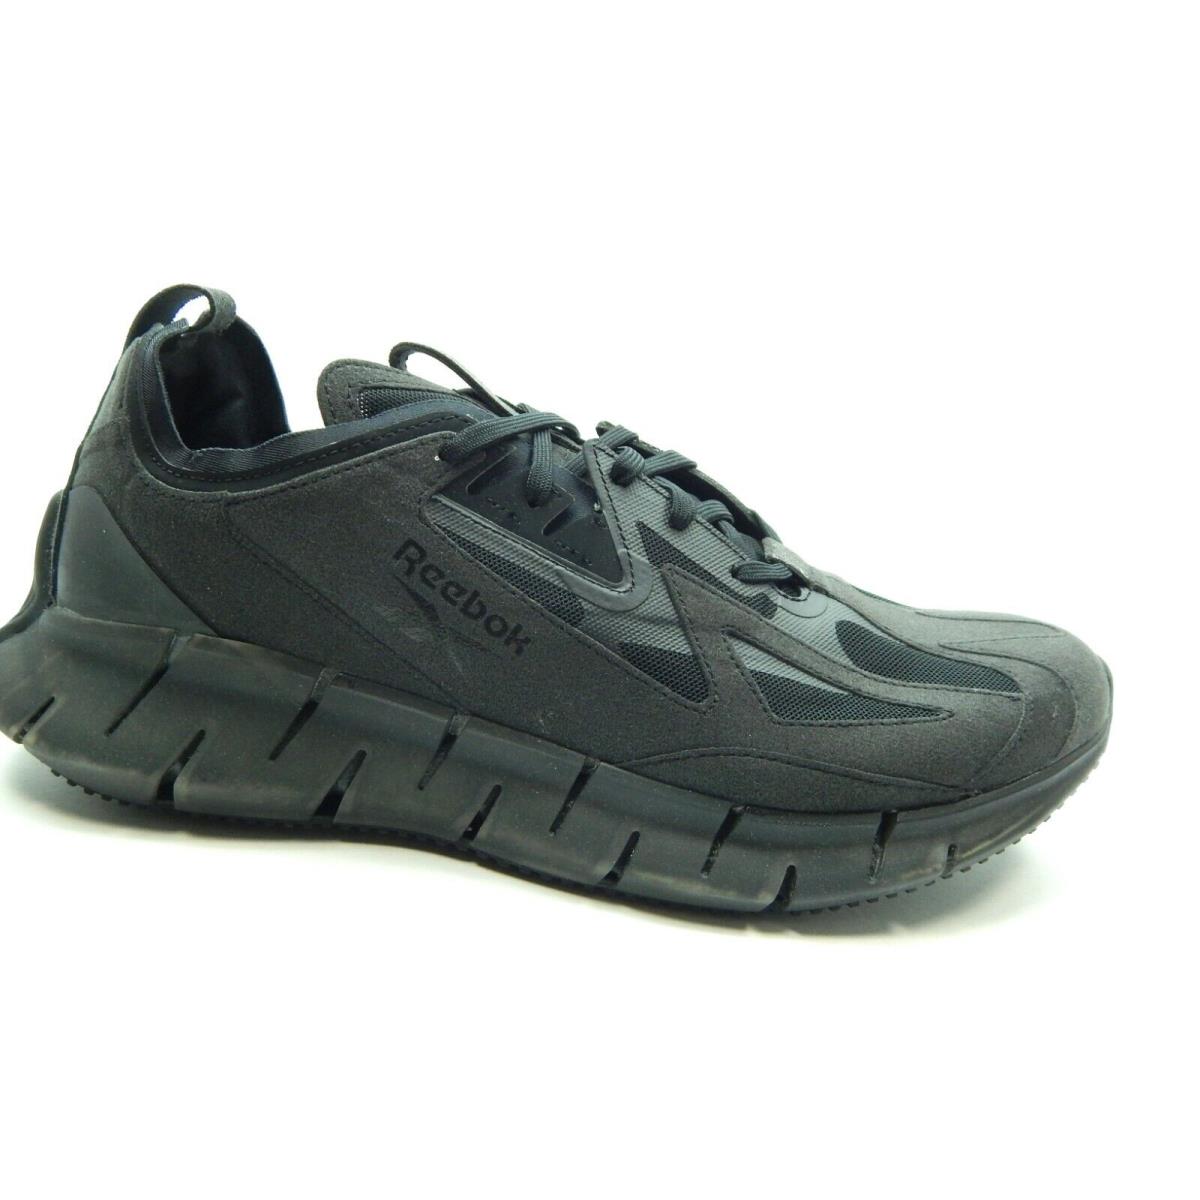 Reebok Zig Kinetica Concept Type Men Running Shoes FW5737 Black Grey Size 8.5